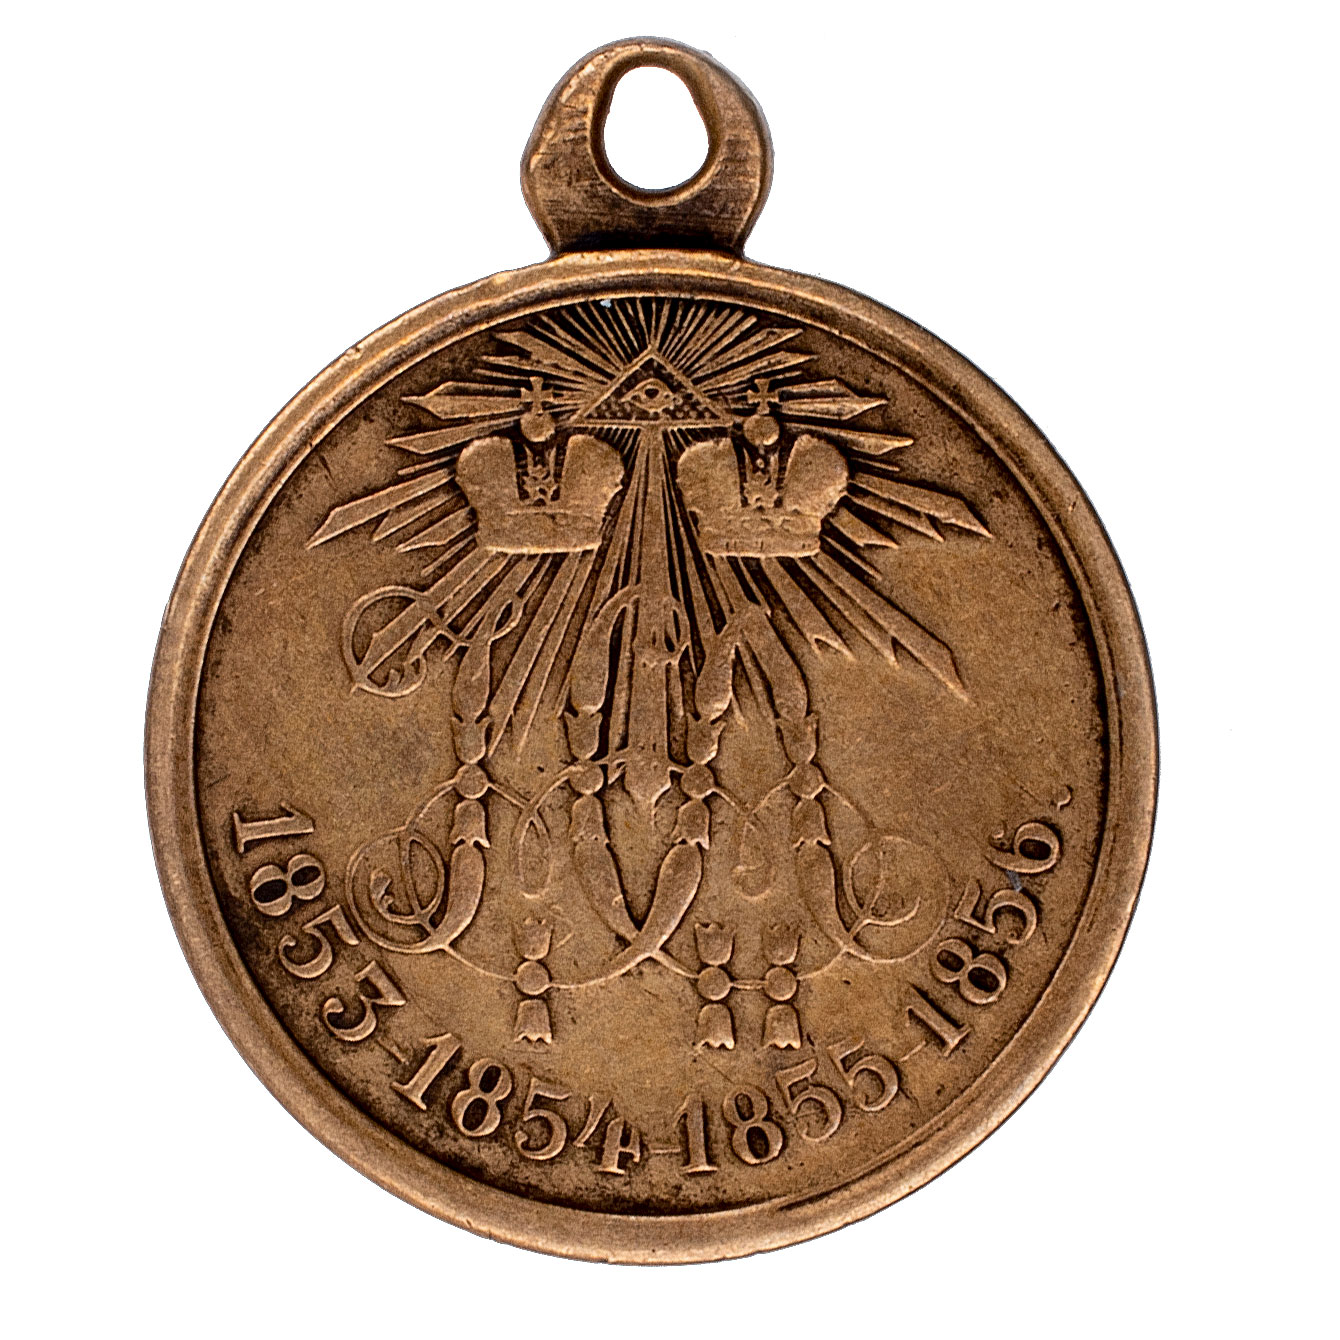 Медаль "В память войны 1853 - 1856 гг". Светлая бронза